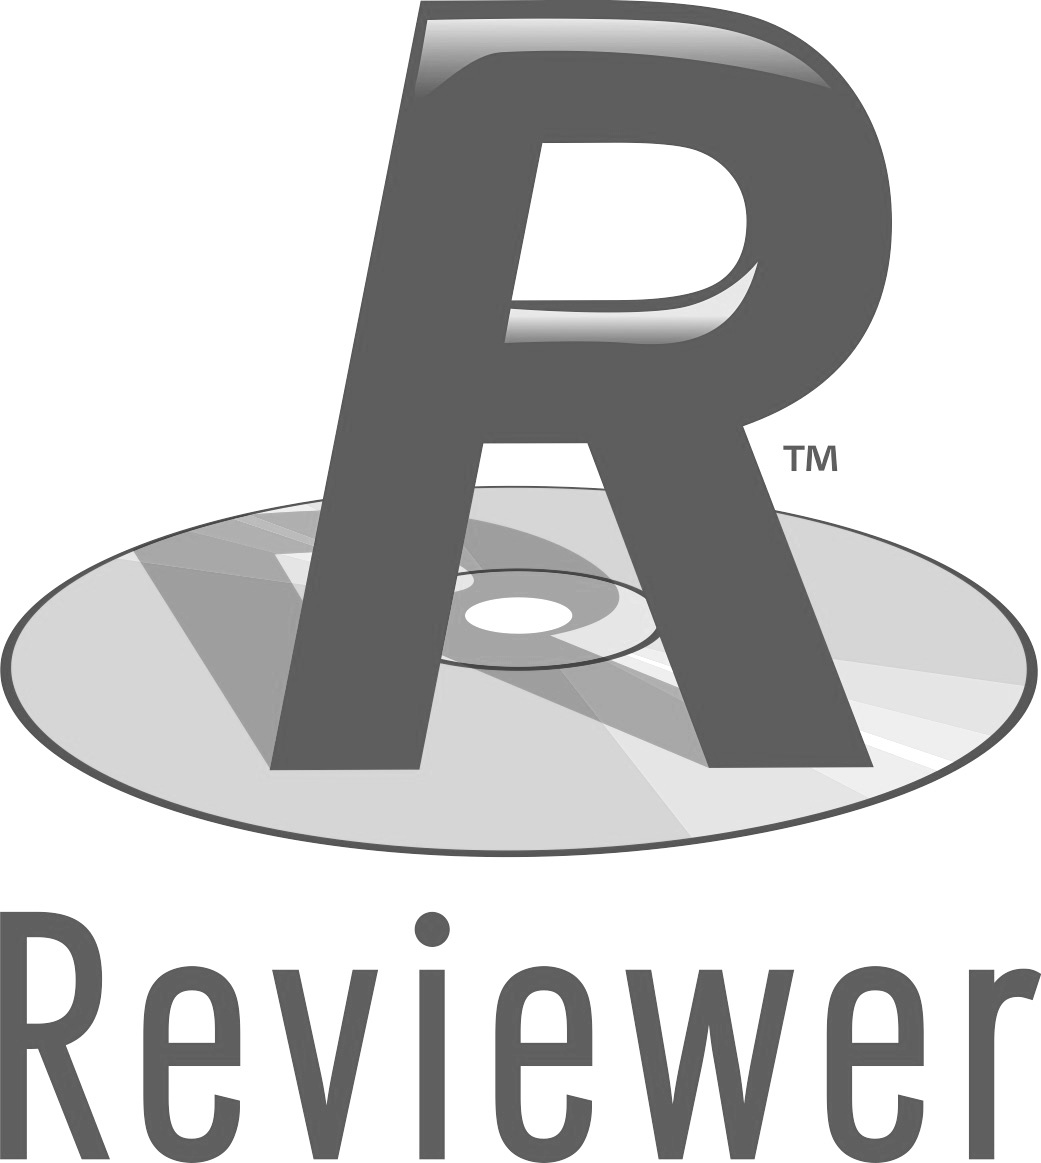 Reviewer Logo.jpg